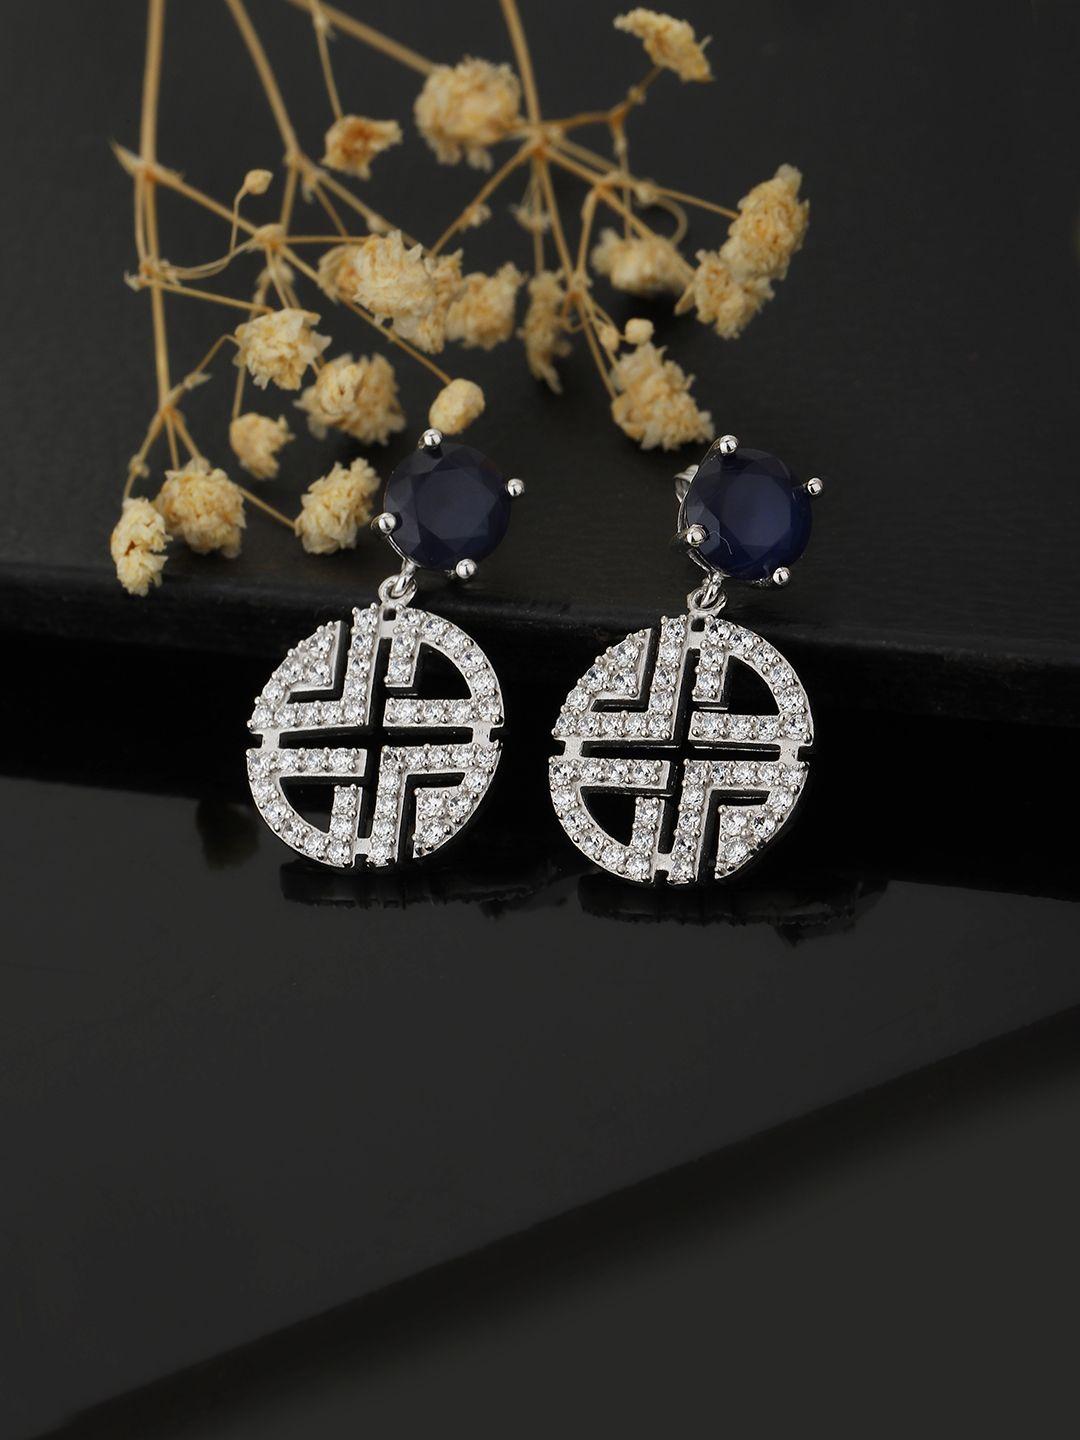 carlton london silver-toned & navy blue rhodium-plated cz studded circular drop earrings